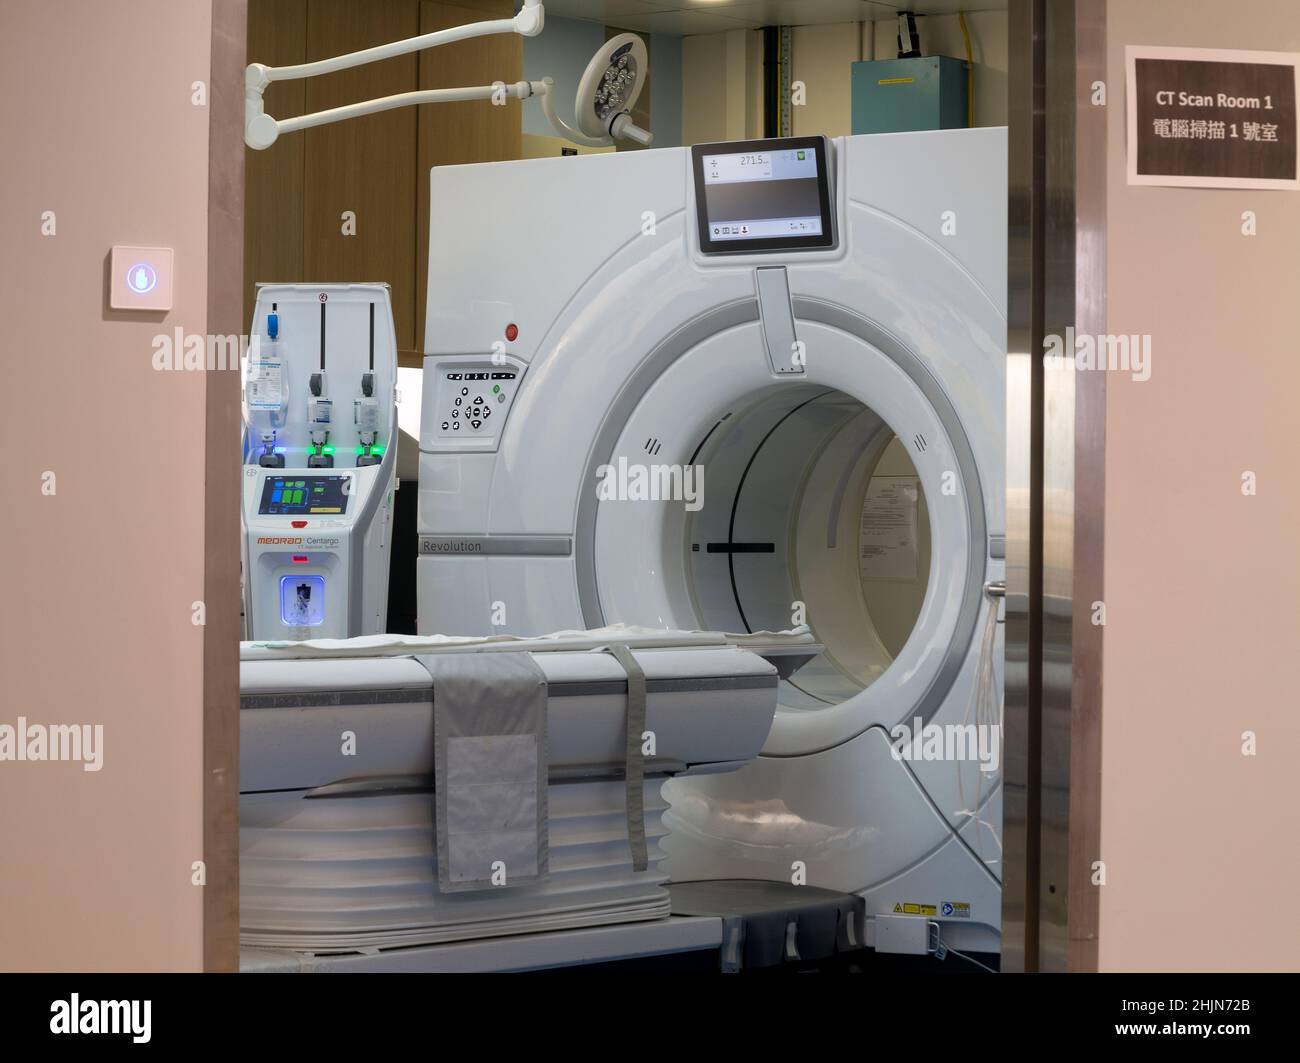 CT scan room in public hospitals, Hong Kong, China. Stock Photo